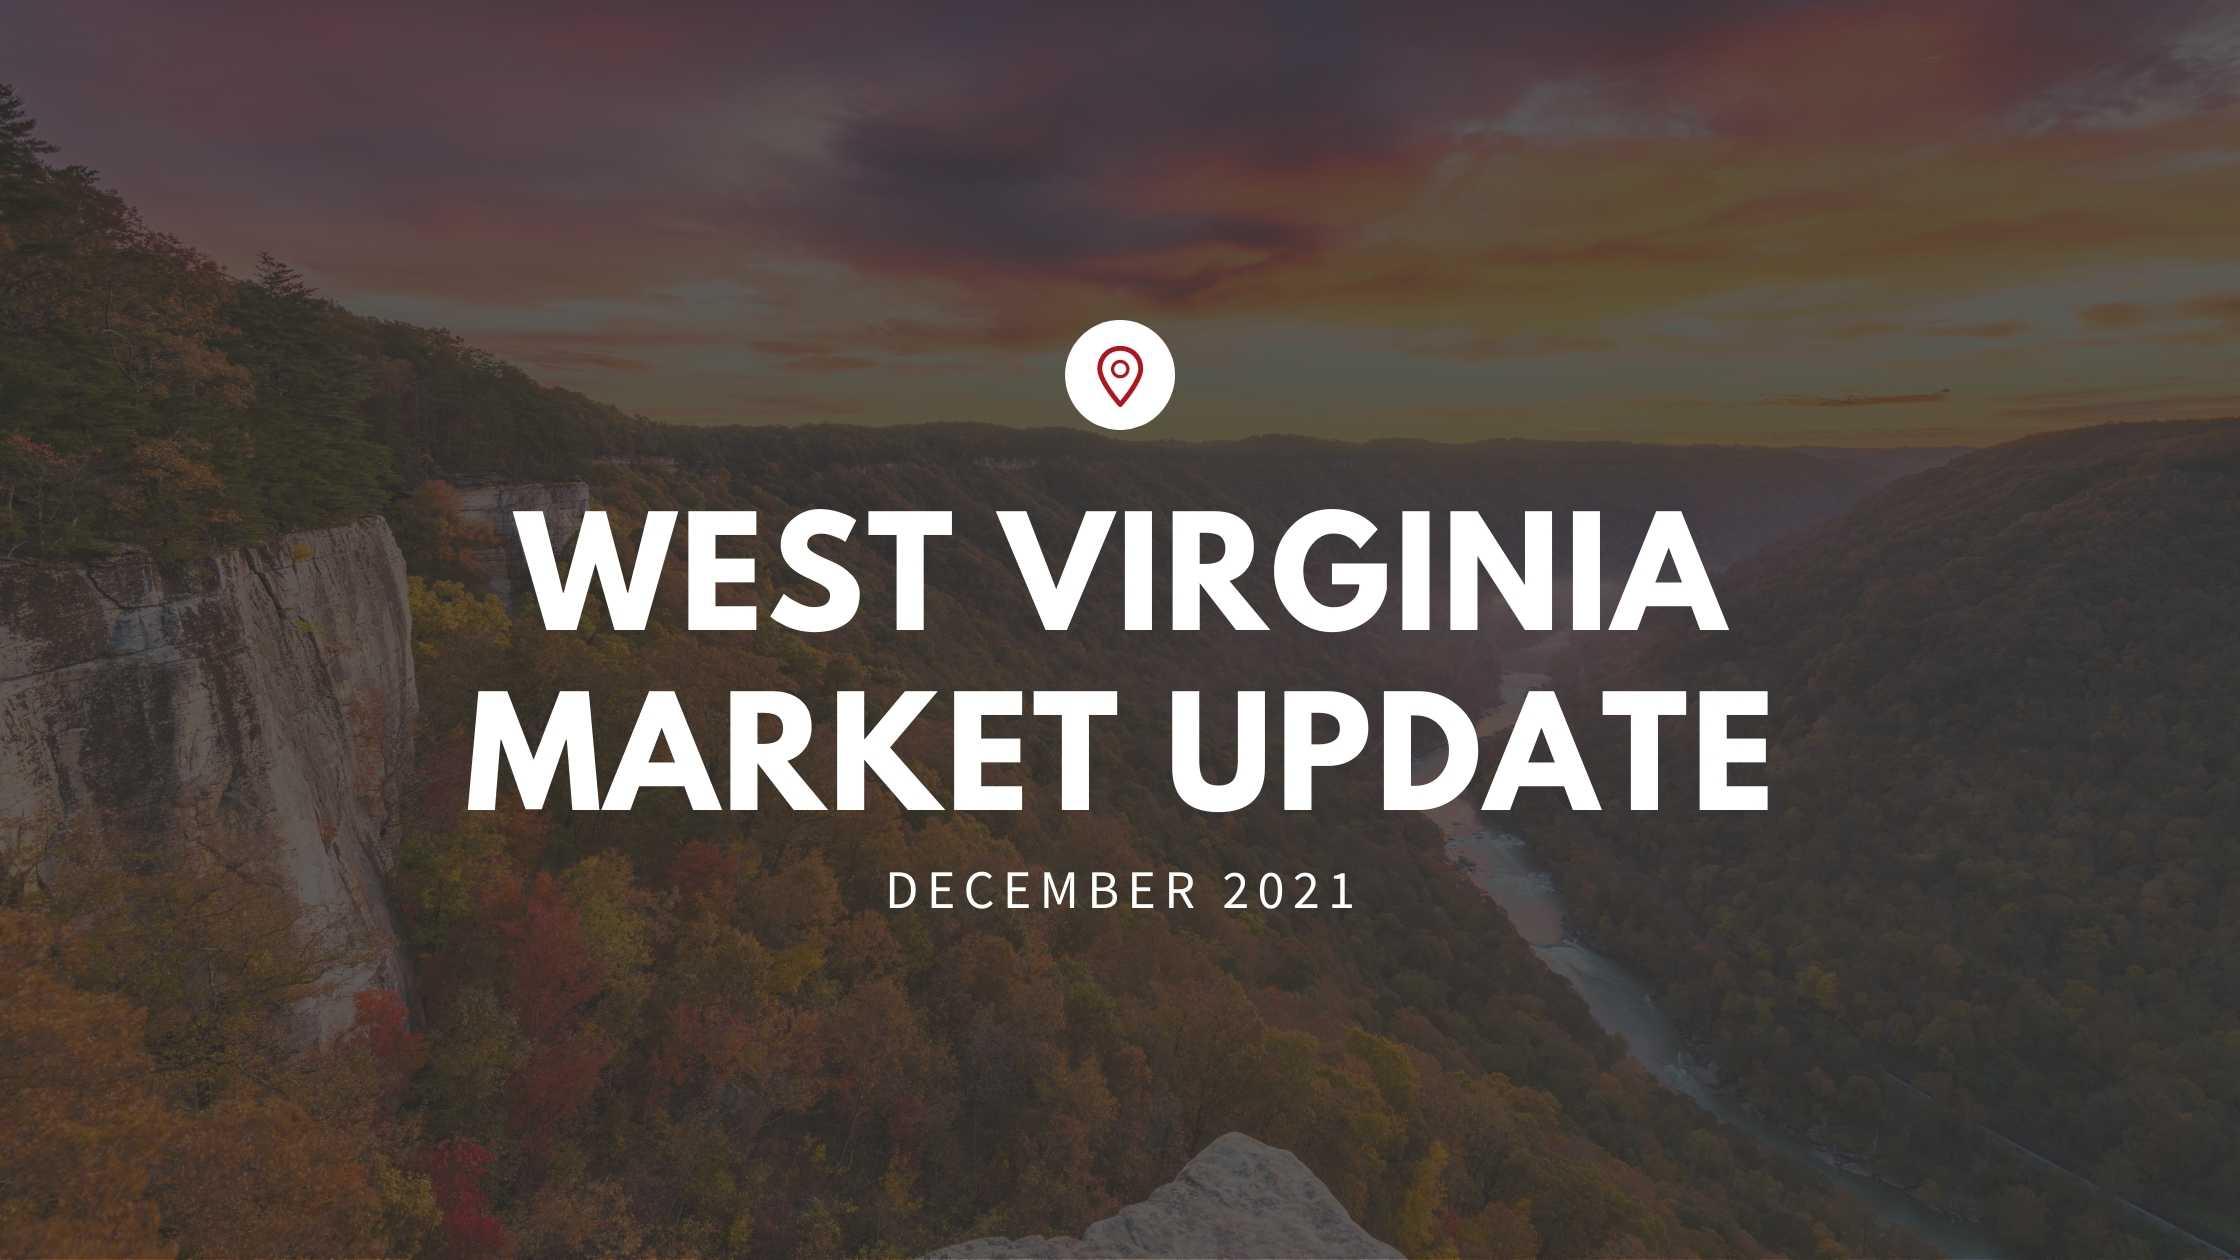 West Virginia’s December Market Update for 2021!